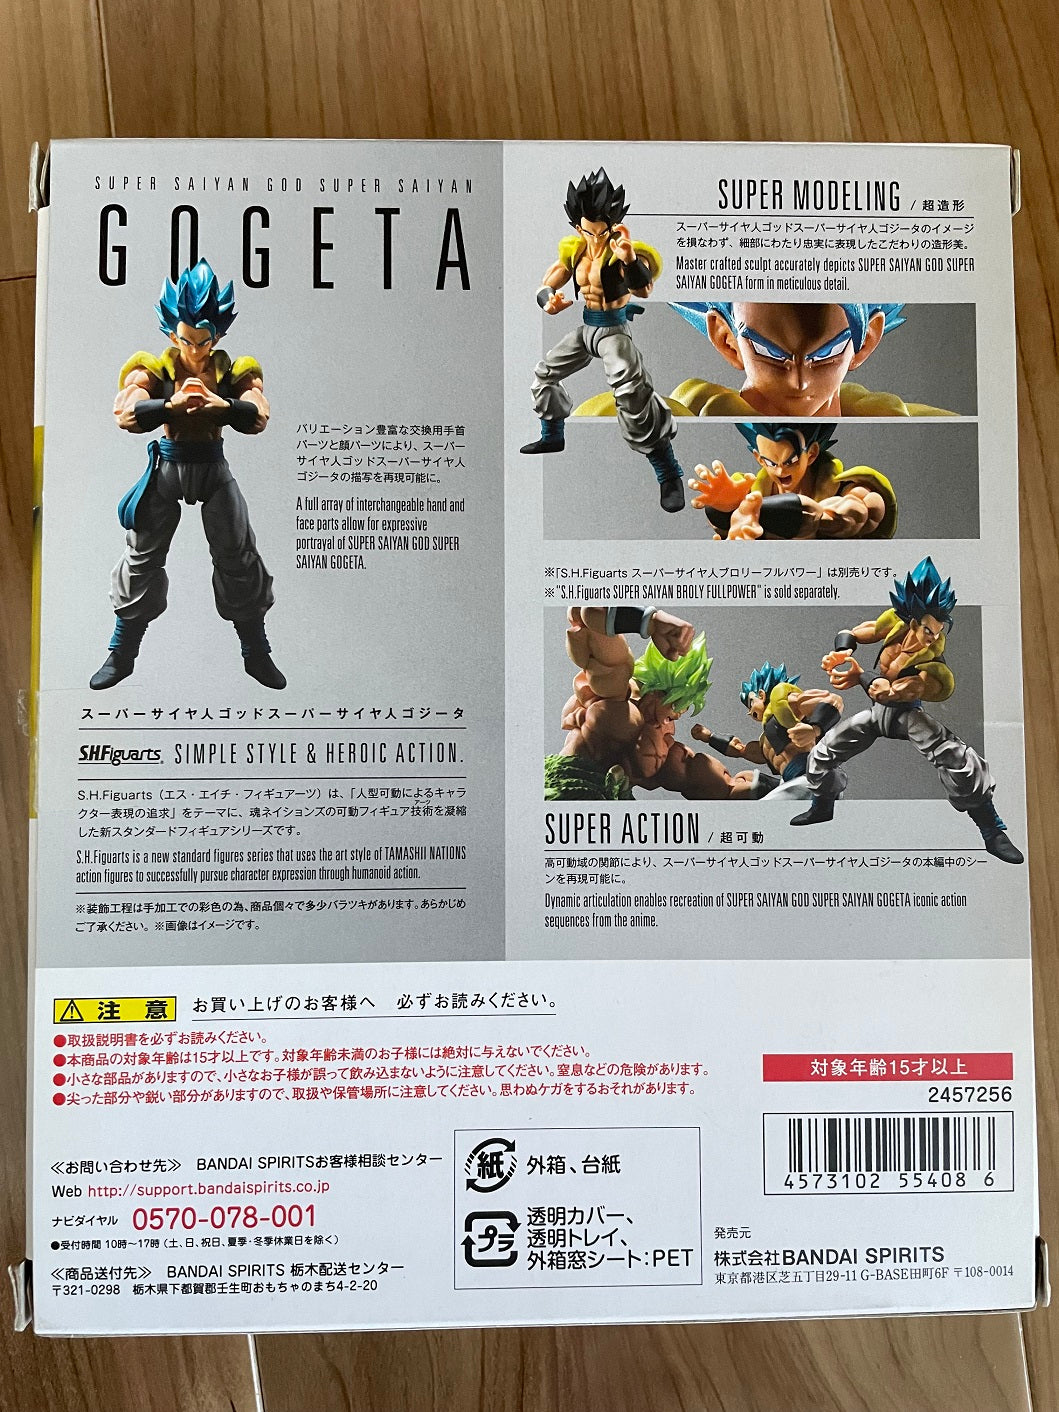 Dragon Ball Super S.H.Figuarts Super Saiyan God Super Saiyan Gogeta